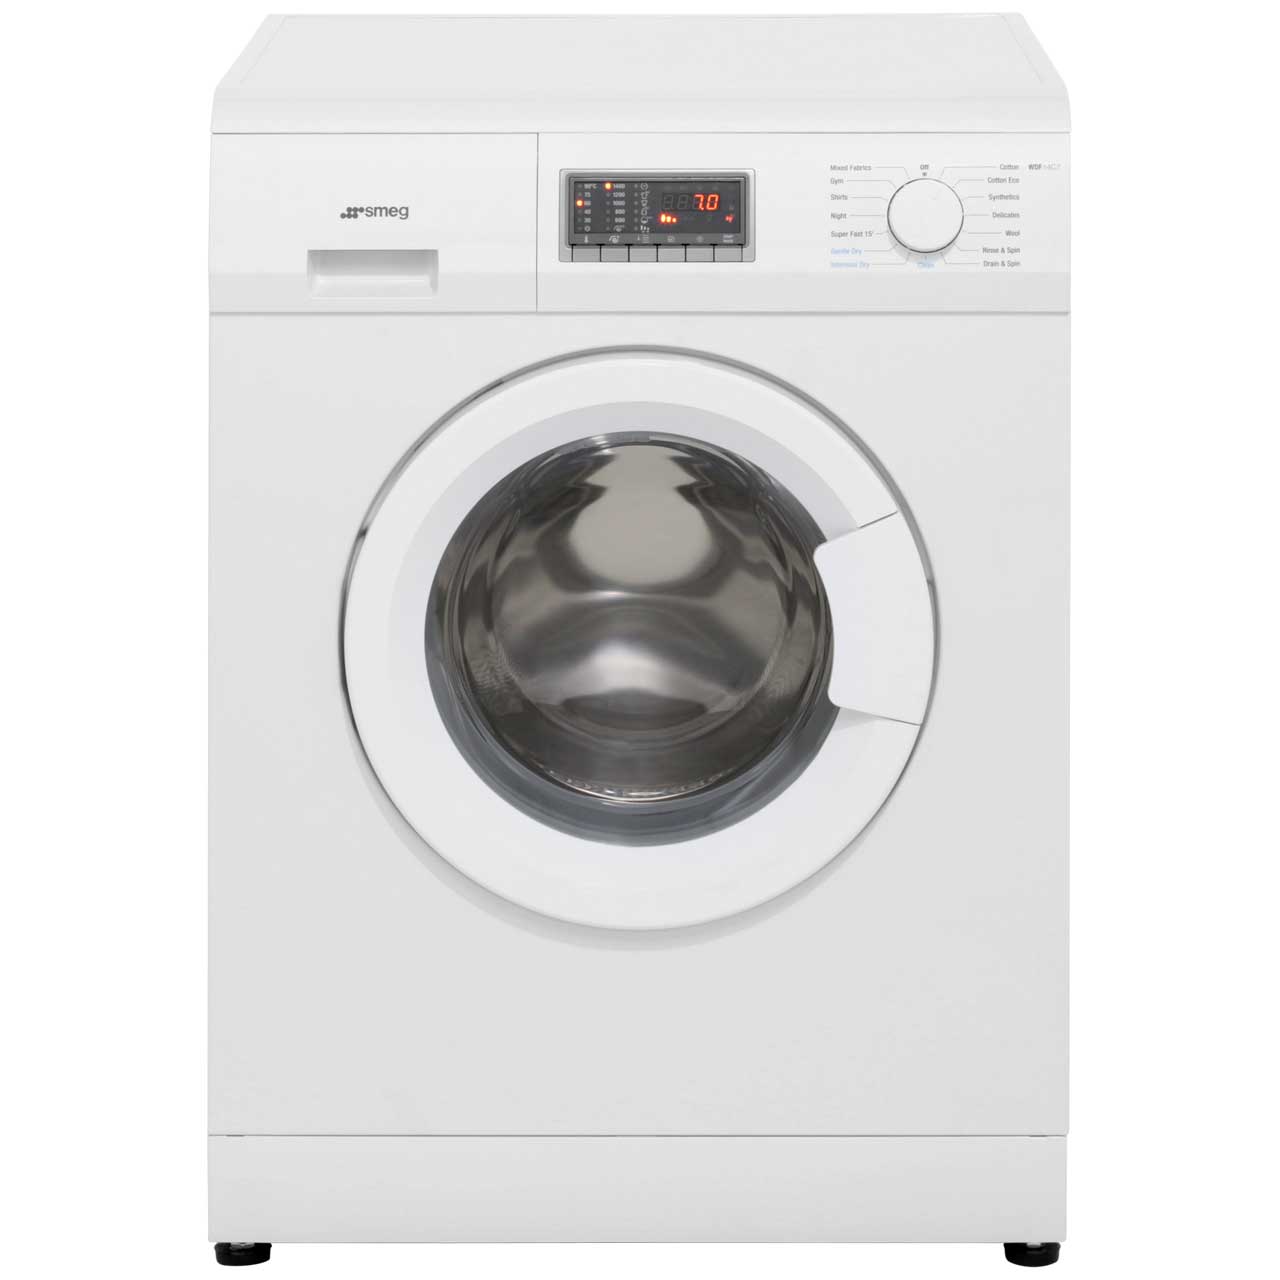 Smeg WDF14C7 Free Standing Washer Dryer in White